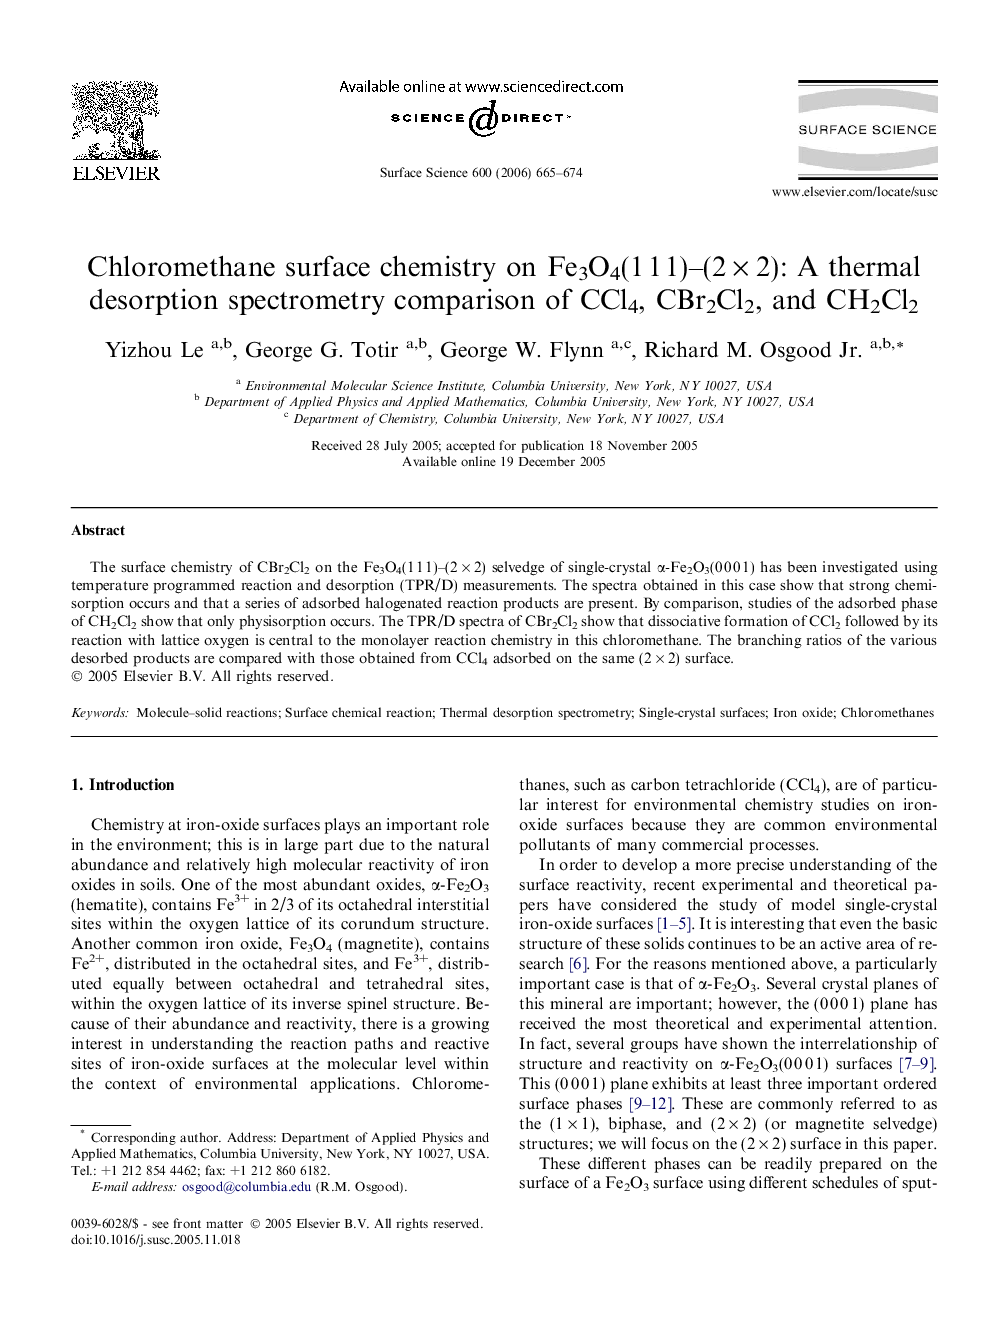 Chloromethane surface chemistry on Fe3O4(1 1 1)-(2 Ã 2): A thermal desorption spectrometry comparison of CCl4, CBr2Cl2, and CH2Cl2